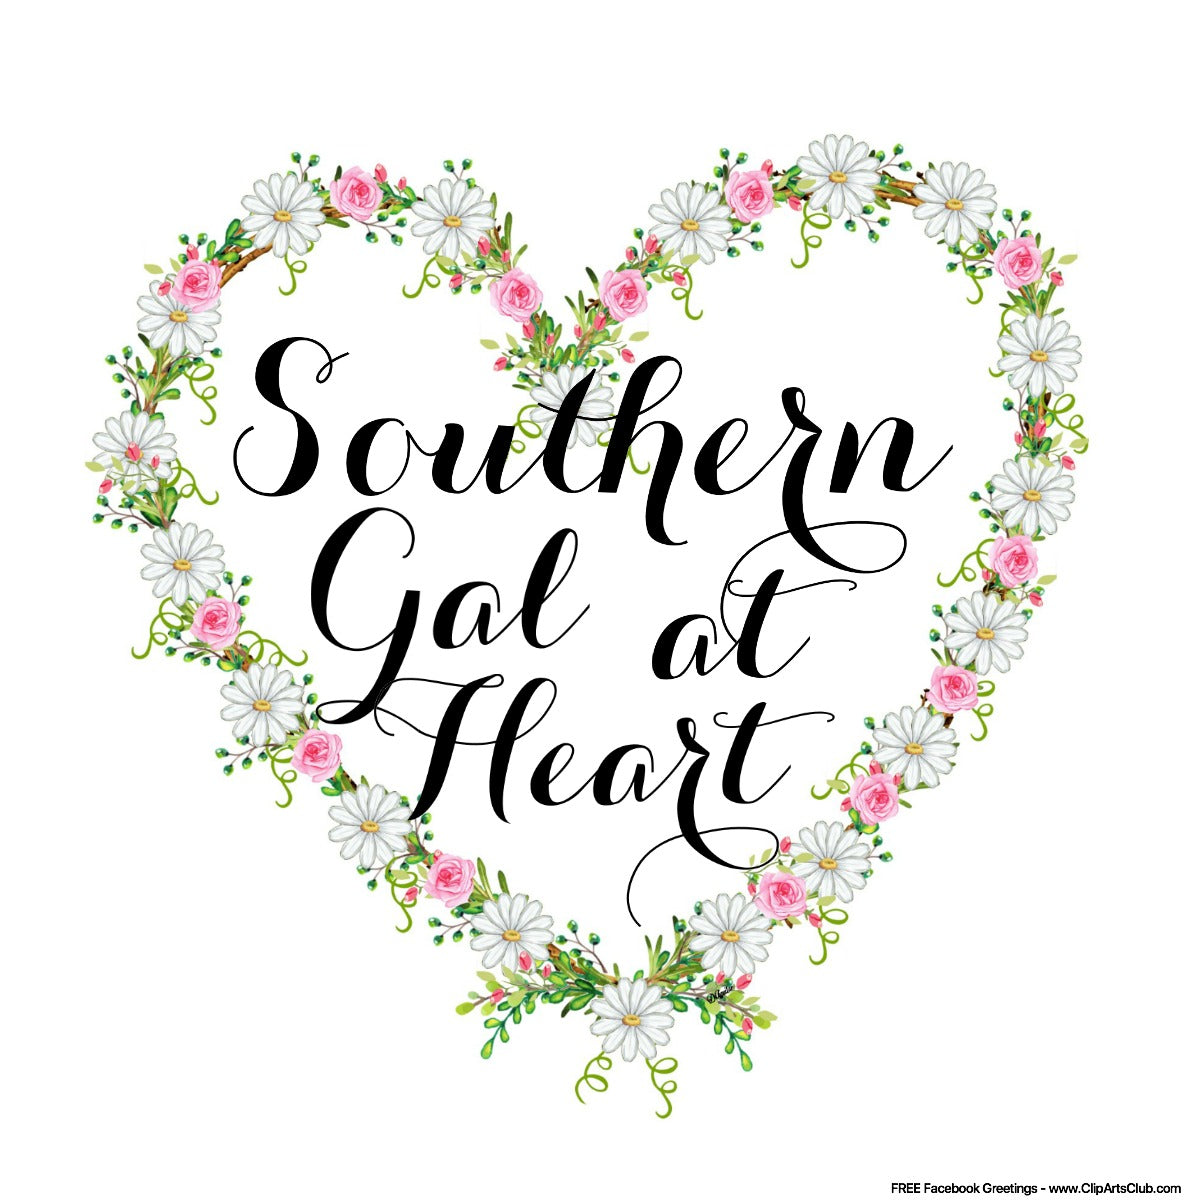 Southern Gal At Heart Facebook Greeting